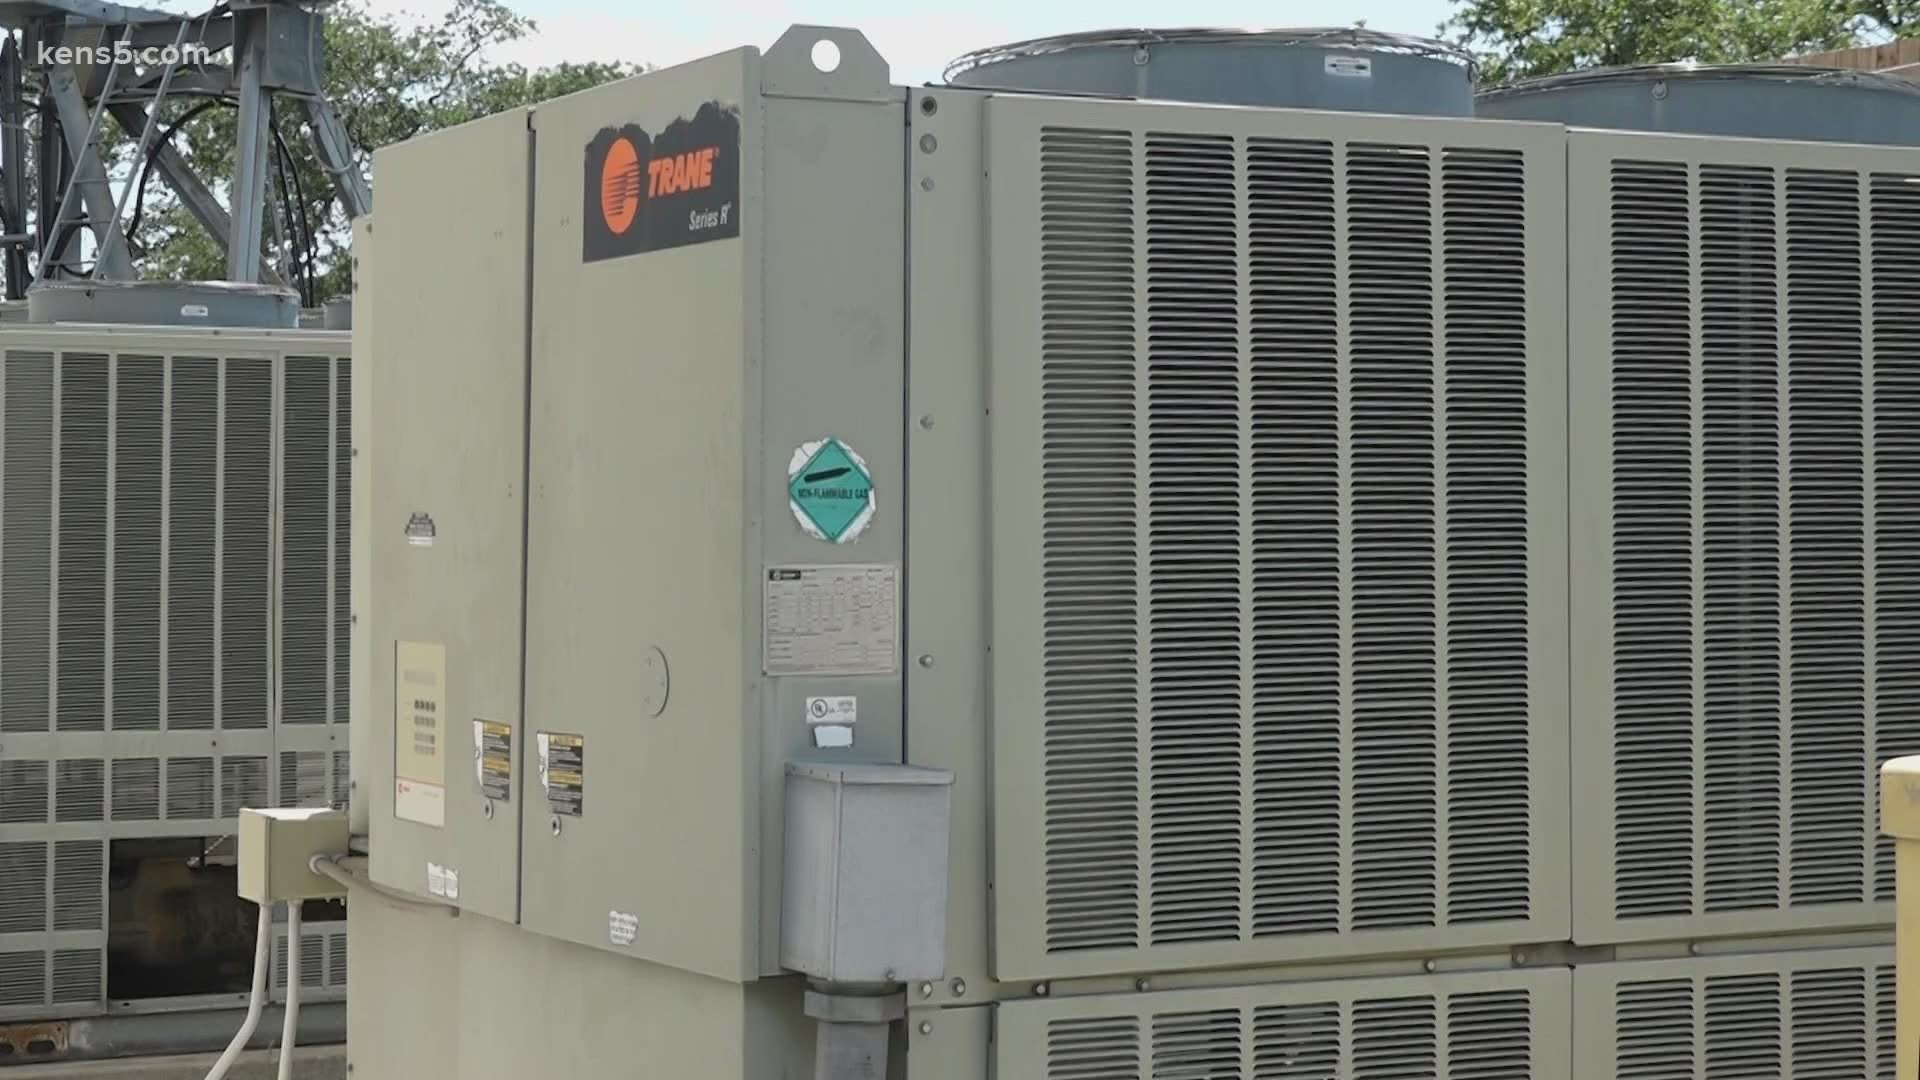 Schools spending millions to upgrade HVAC systems kens5com